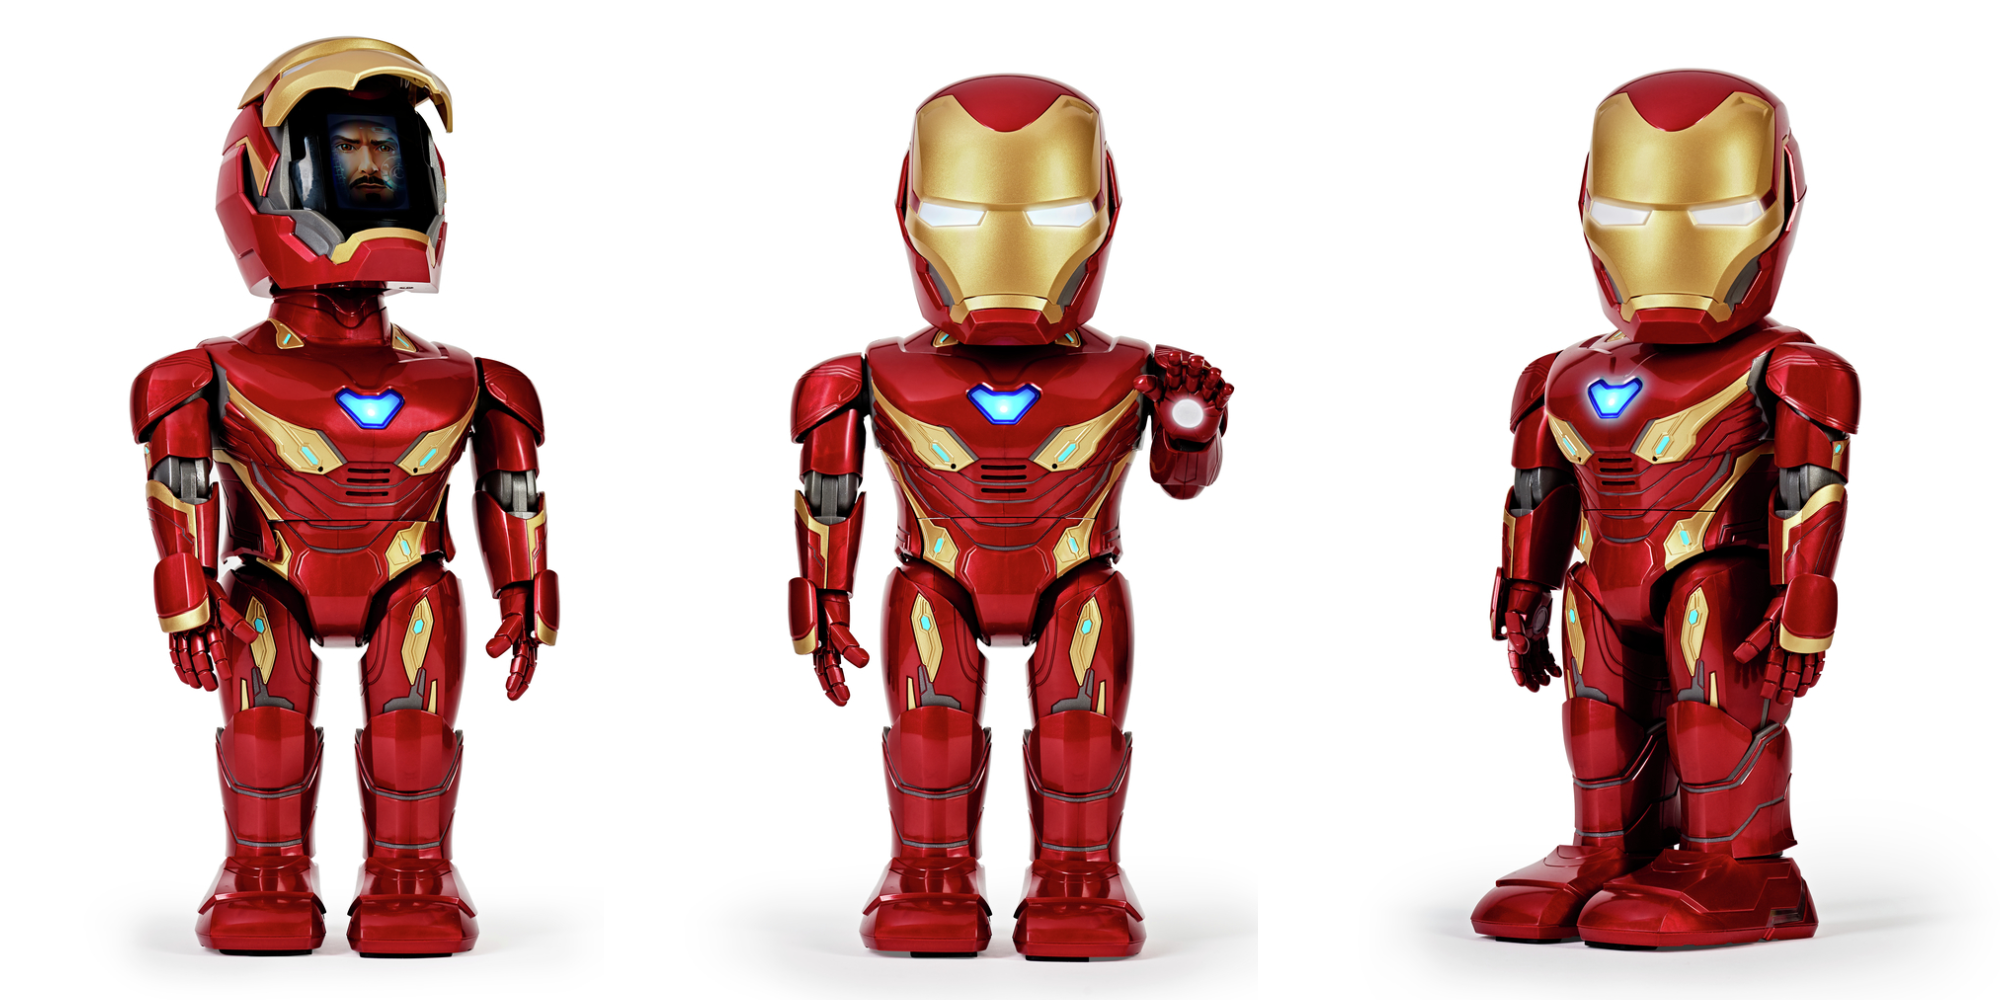 UBTECH Iron Man Robot brings Marvel's MK20 armor to life   20to20Toys